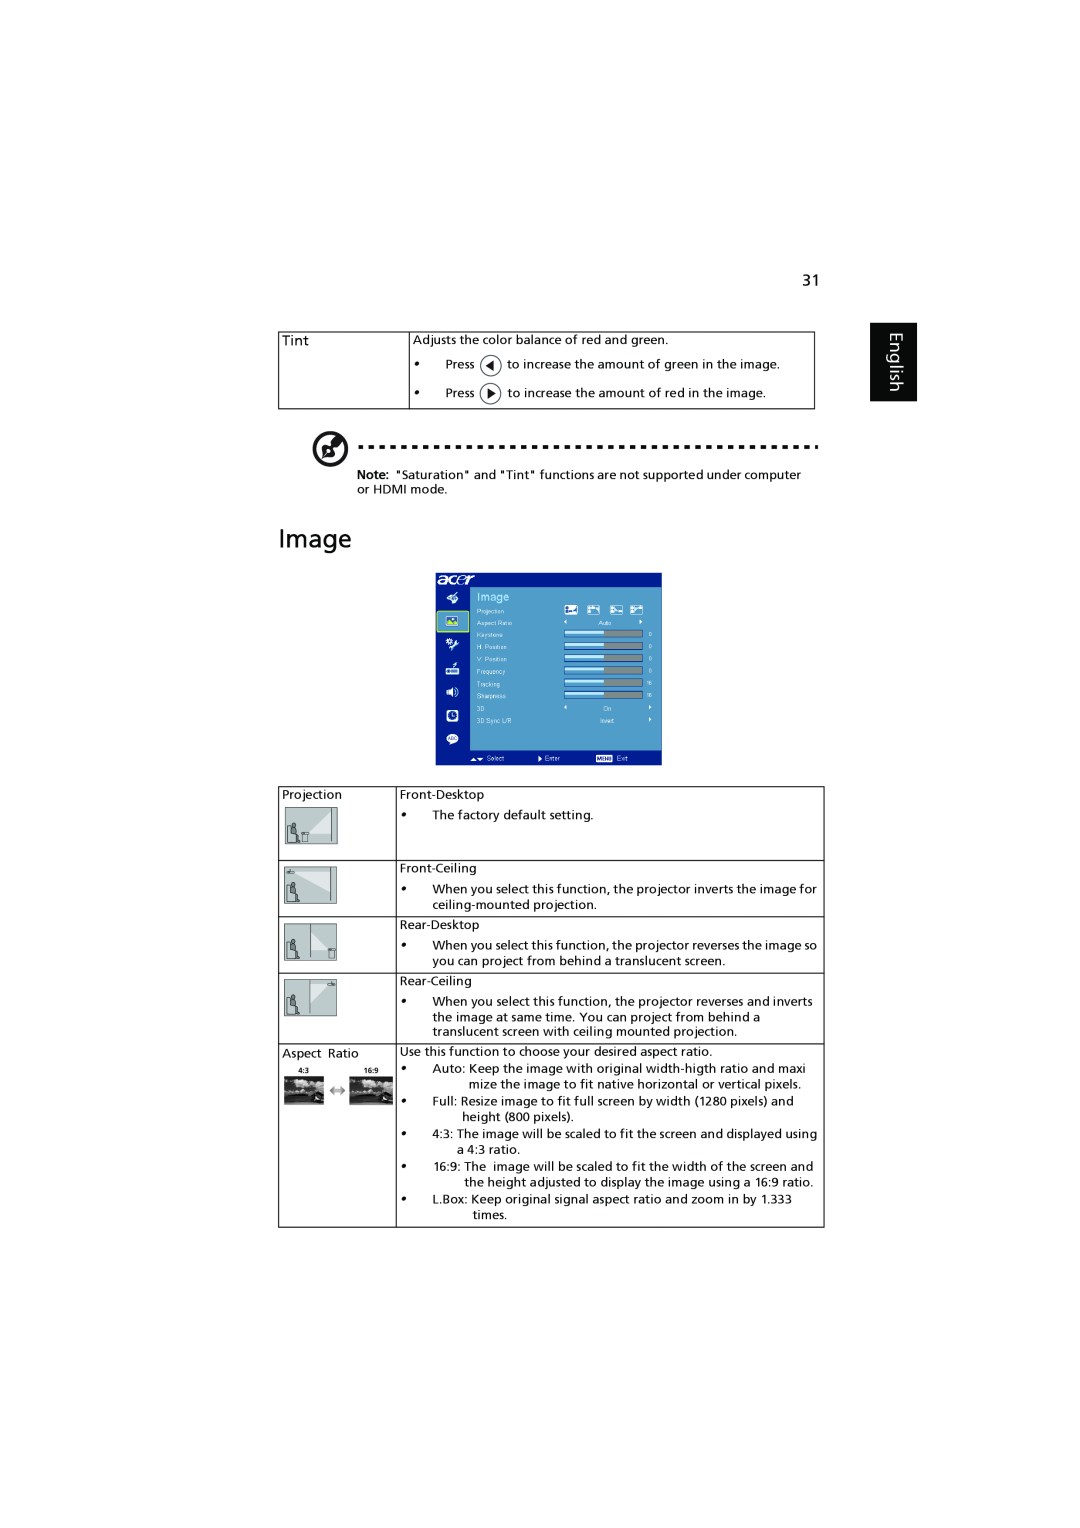 Acer P5271i, P5390W, P5290, P5271n manual Image, English, Tint 